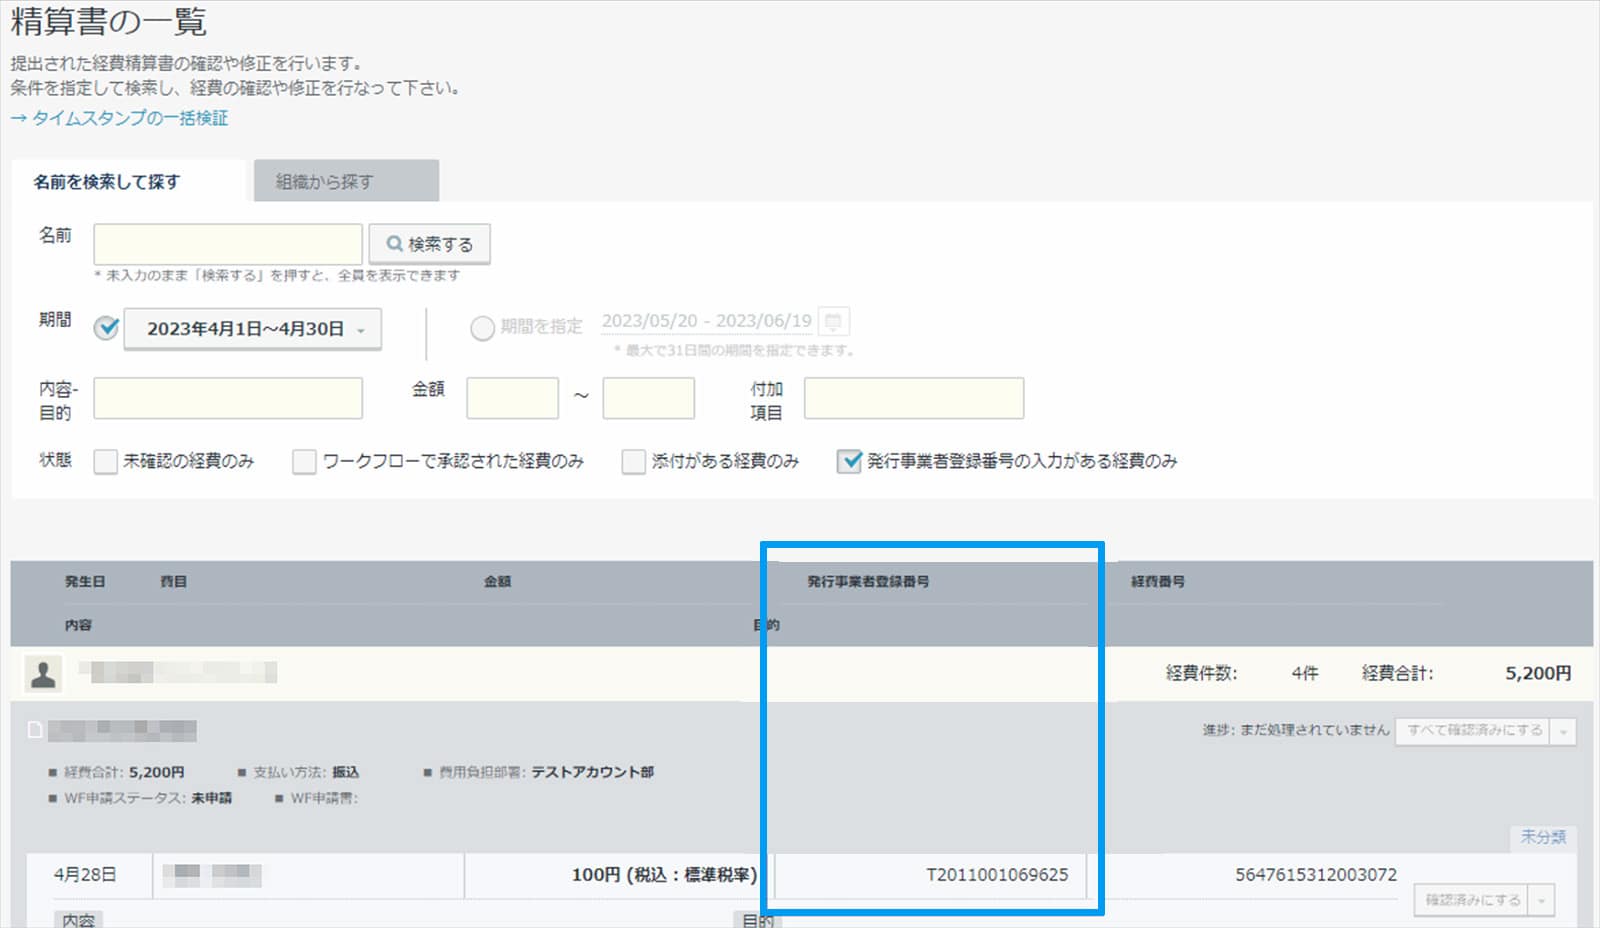 rakumo ケイヒ 精算書一覧画面で登録番号の入力有無確認や絞り込み表示に対応